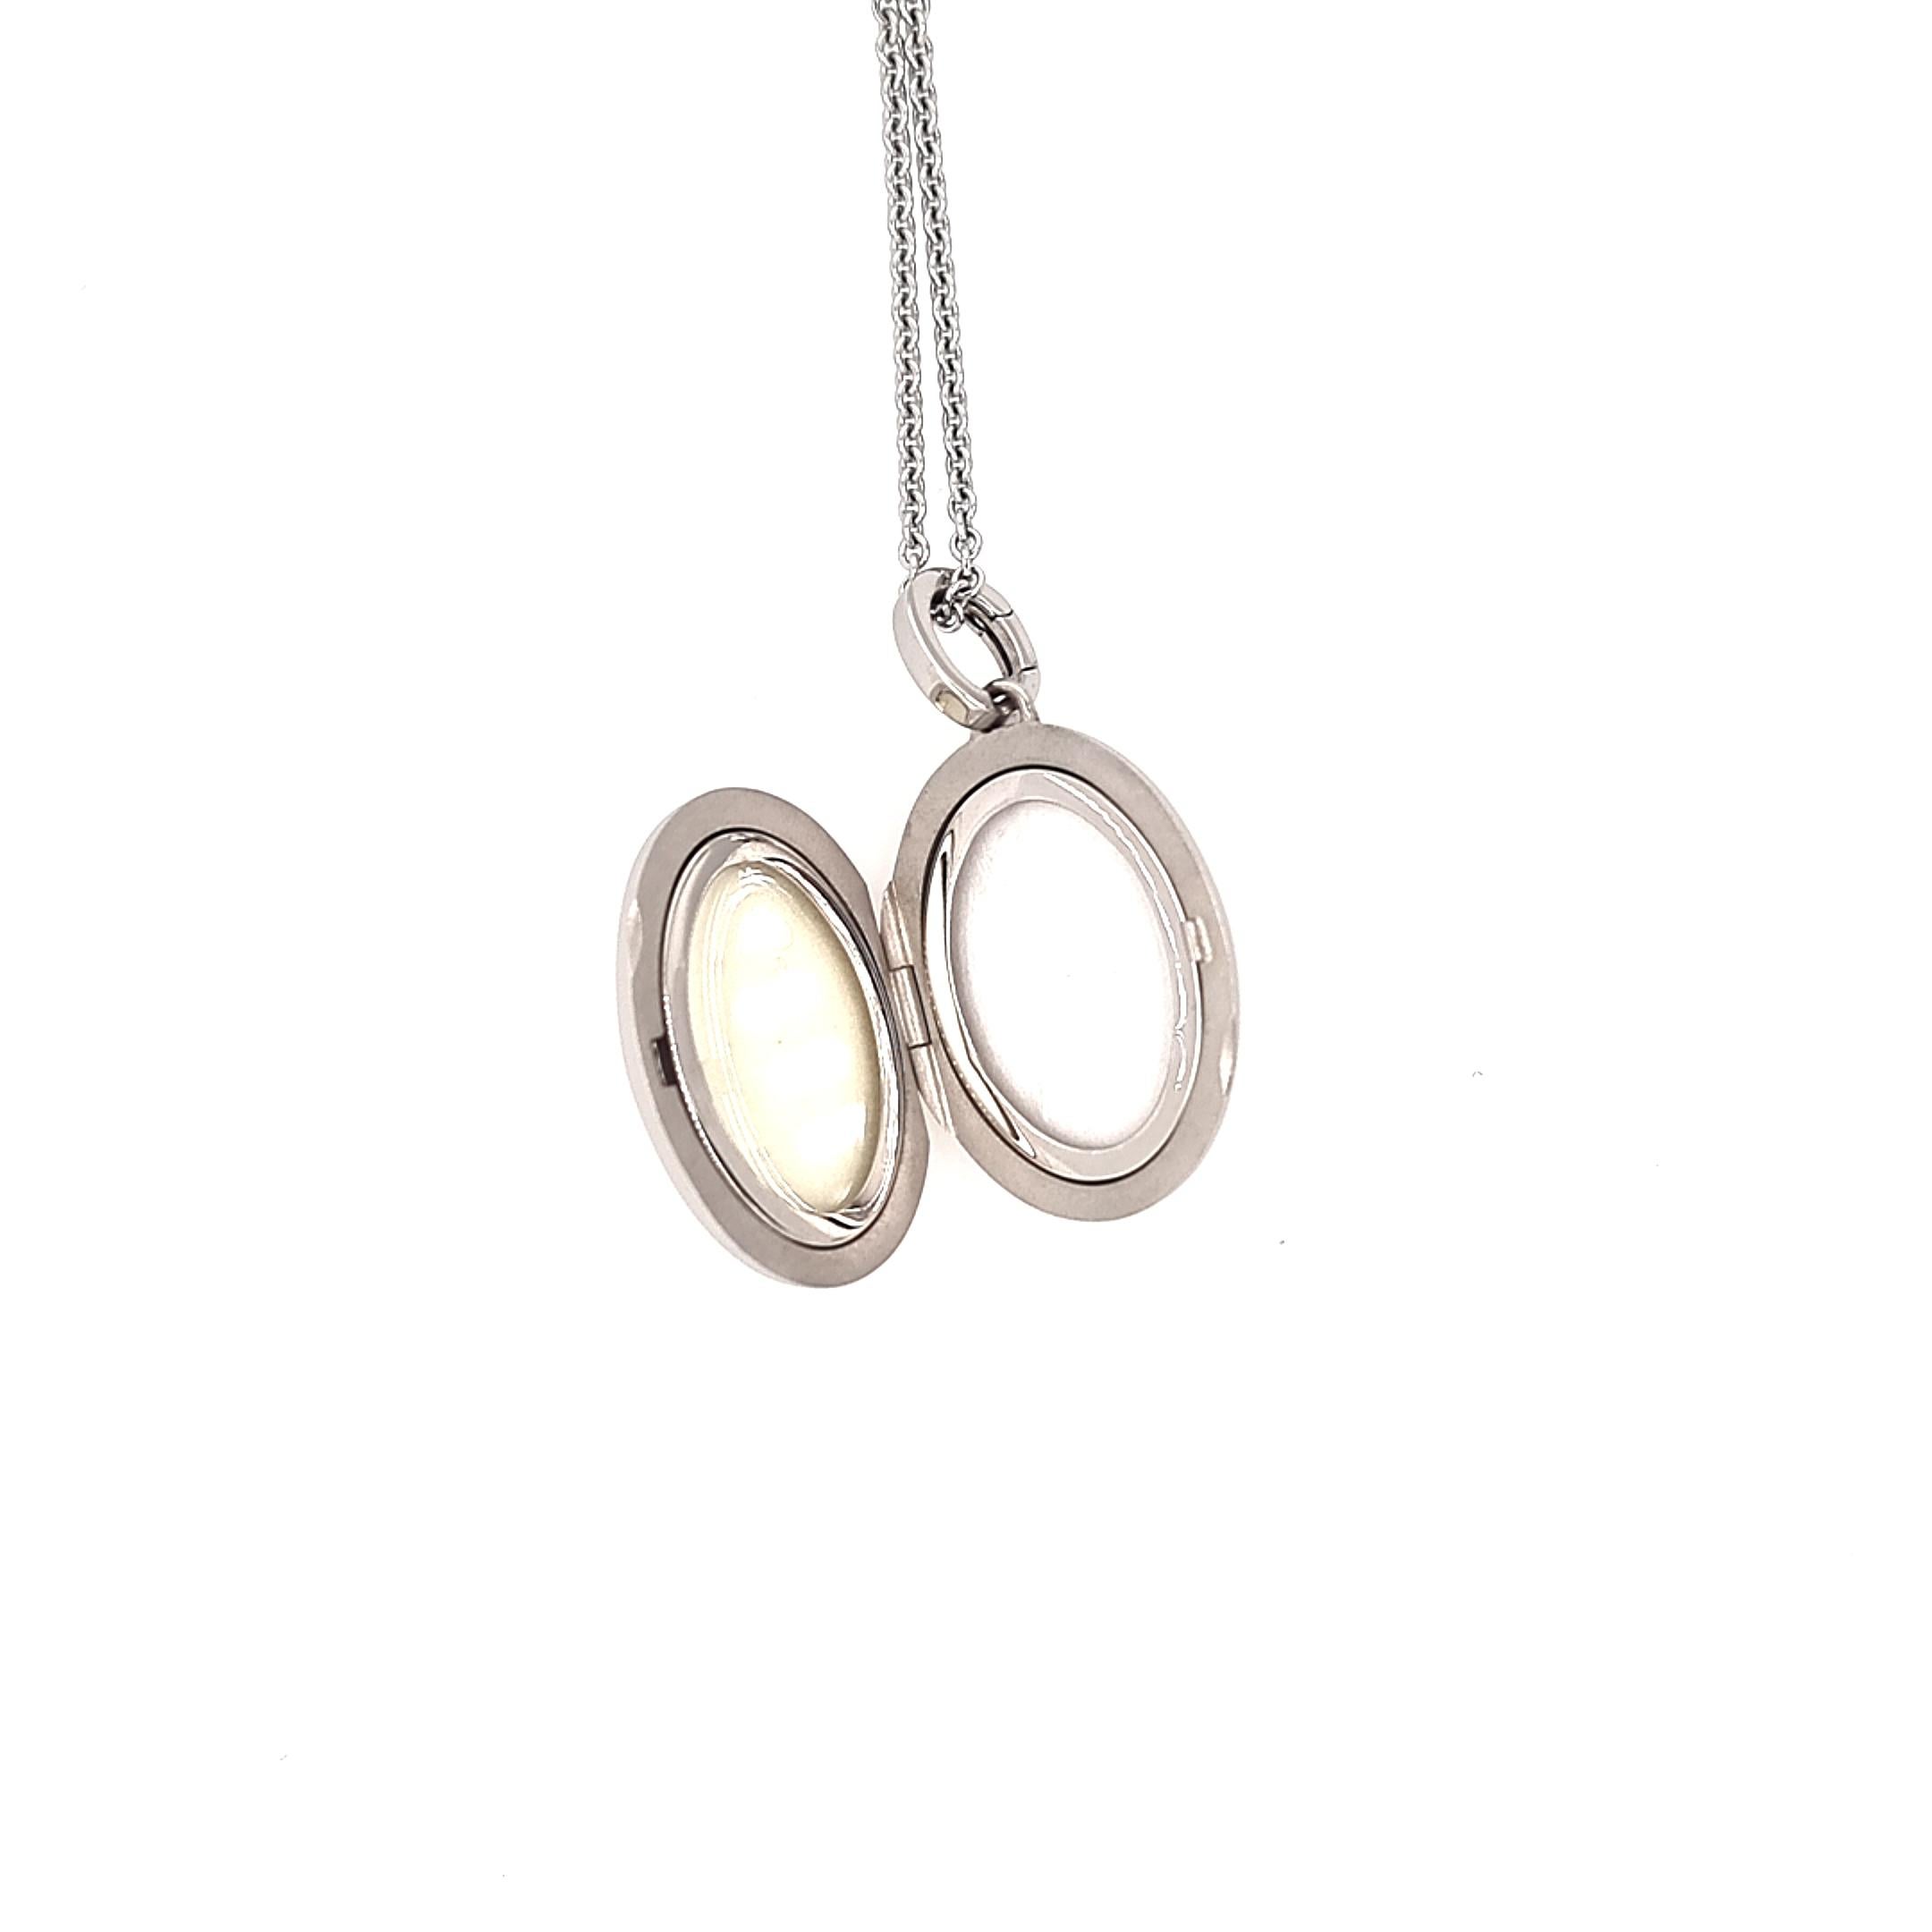 Oval Locket Pendant Necklace Solid 18k White Gold 4 Diamonds 0.04 Carat H VS For Sale 2